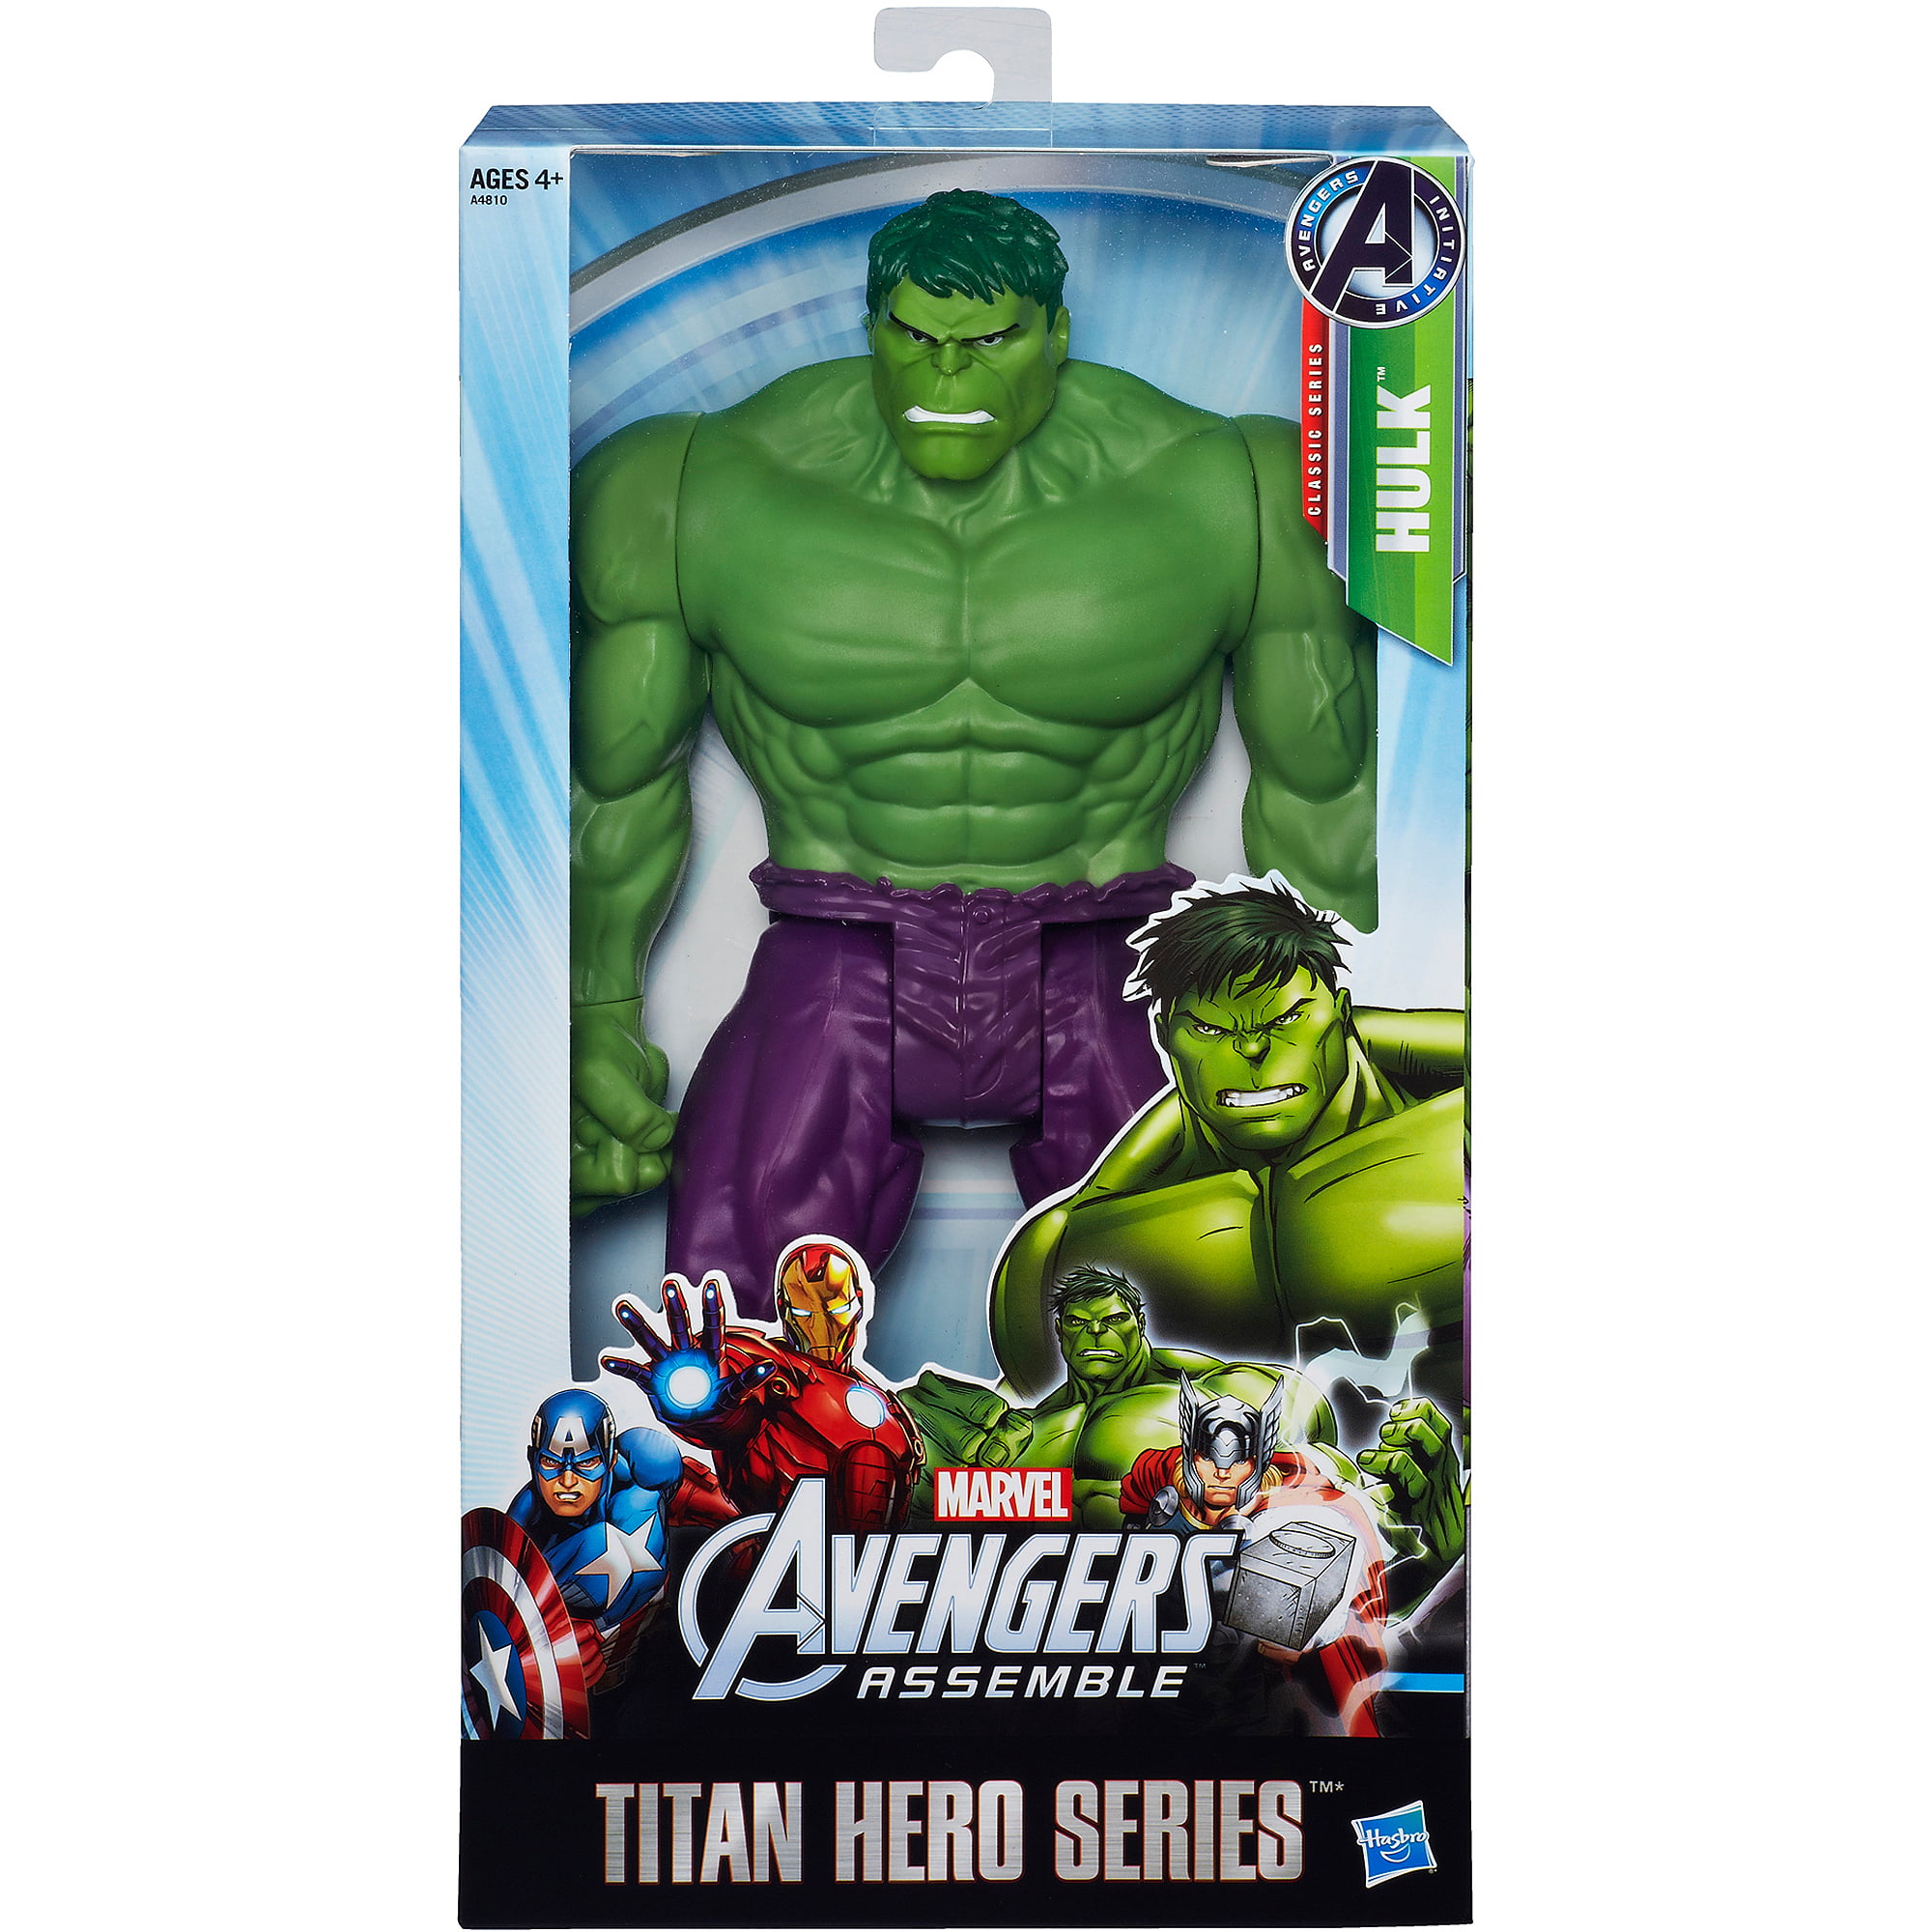 Circus basketball gene Marvel Avengers Titan Hero Series Hulk 12" Action Figure - Walmart.com